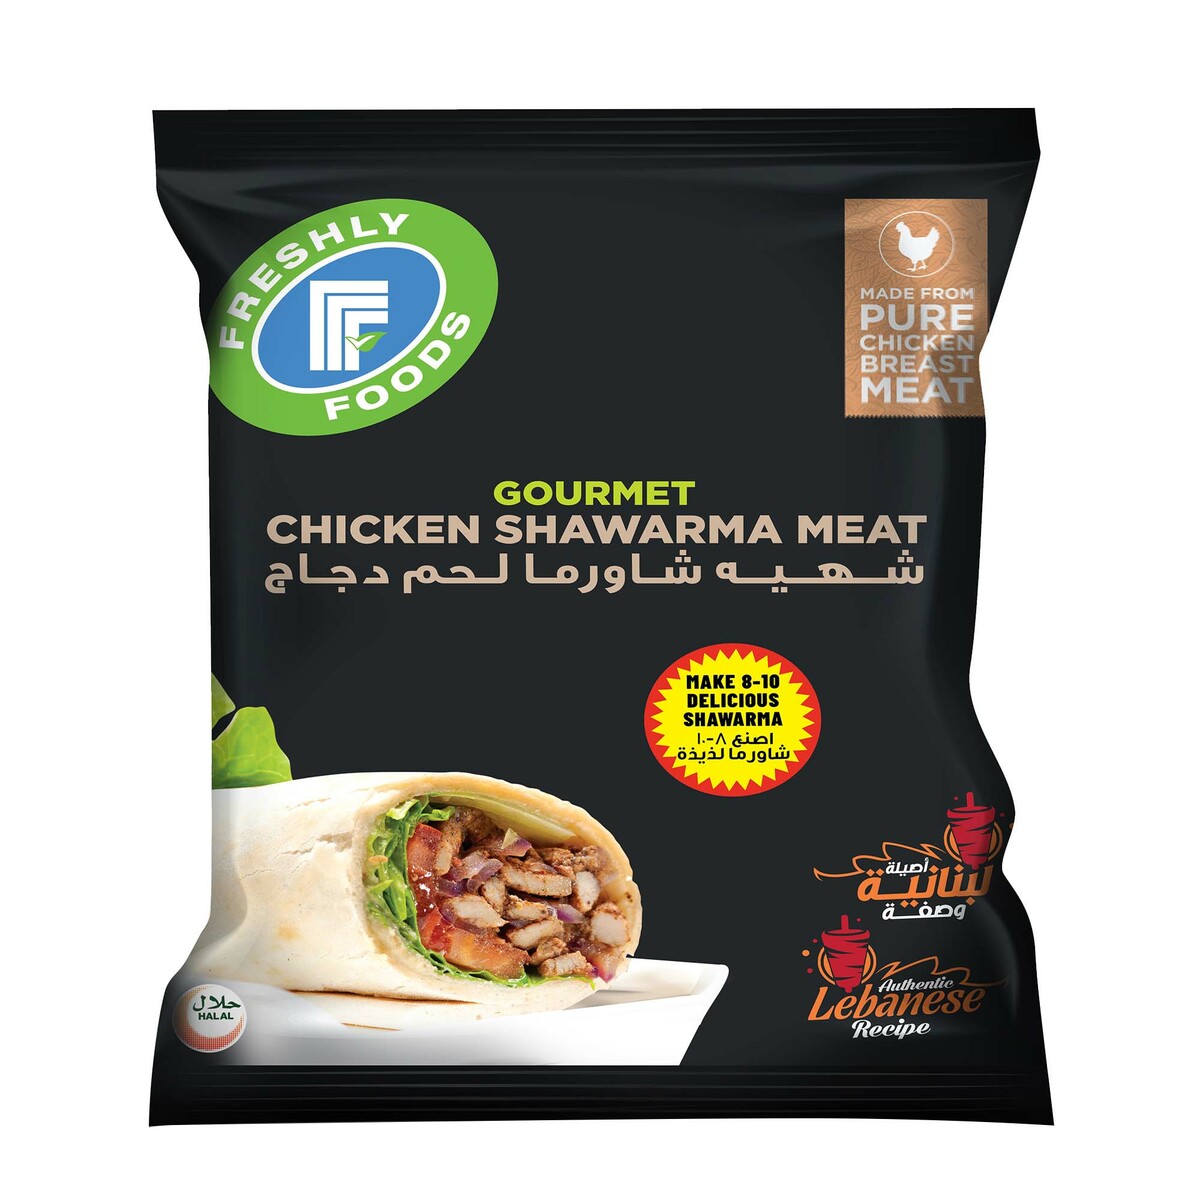 Freshly Foods Gourmet Chicken Shawarma Meat 650g